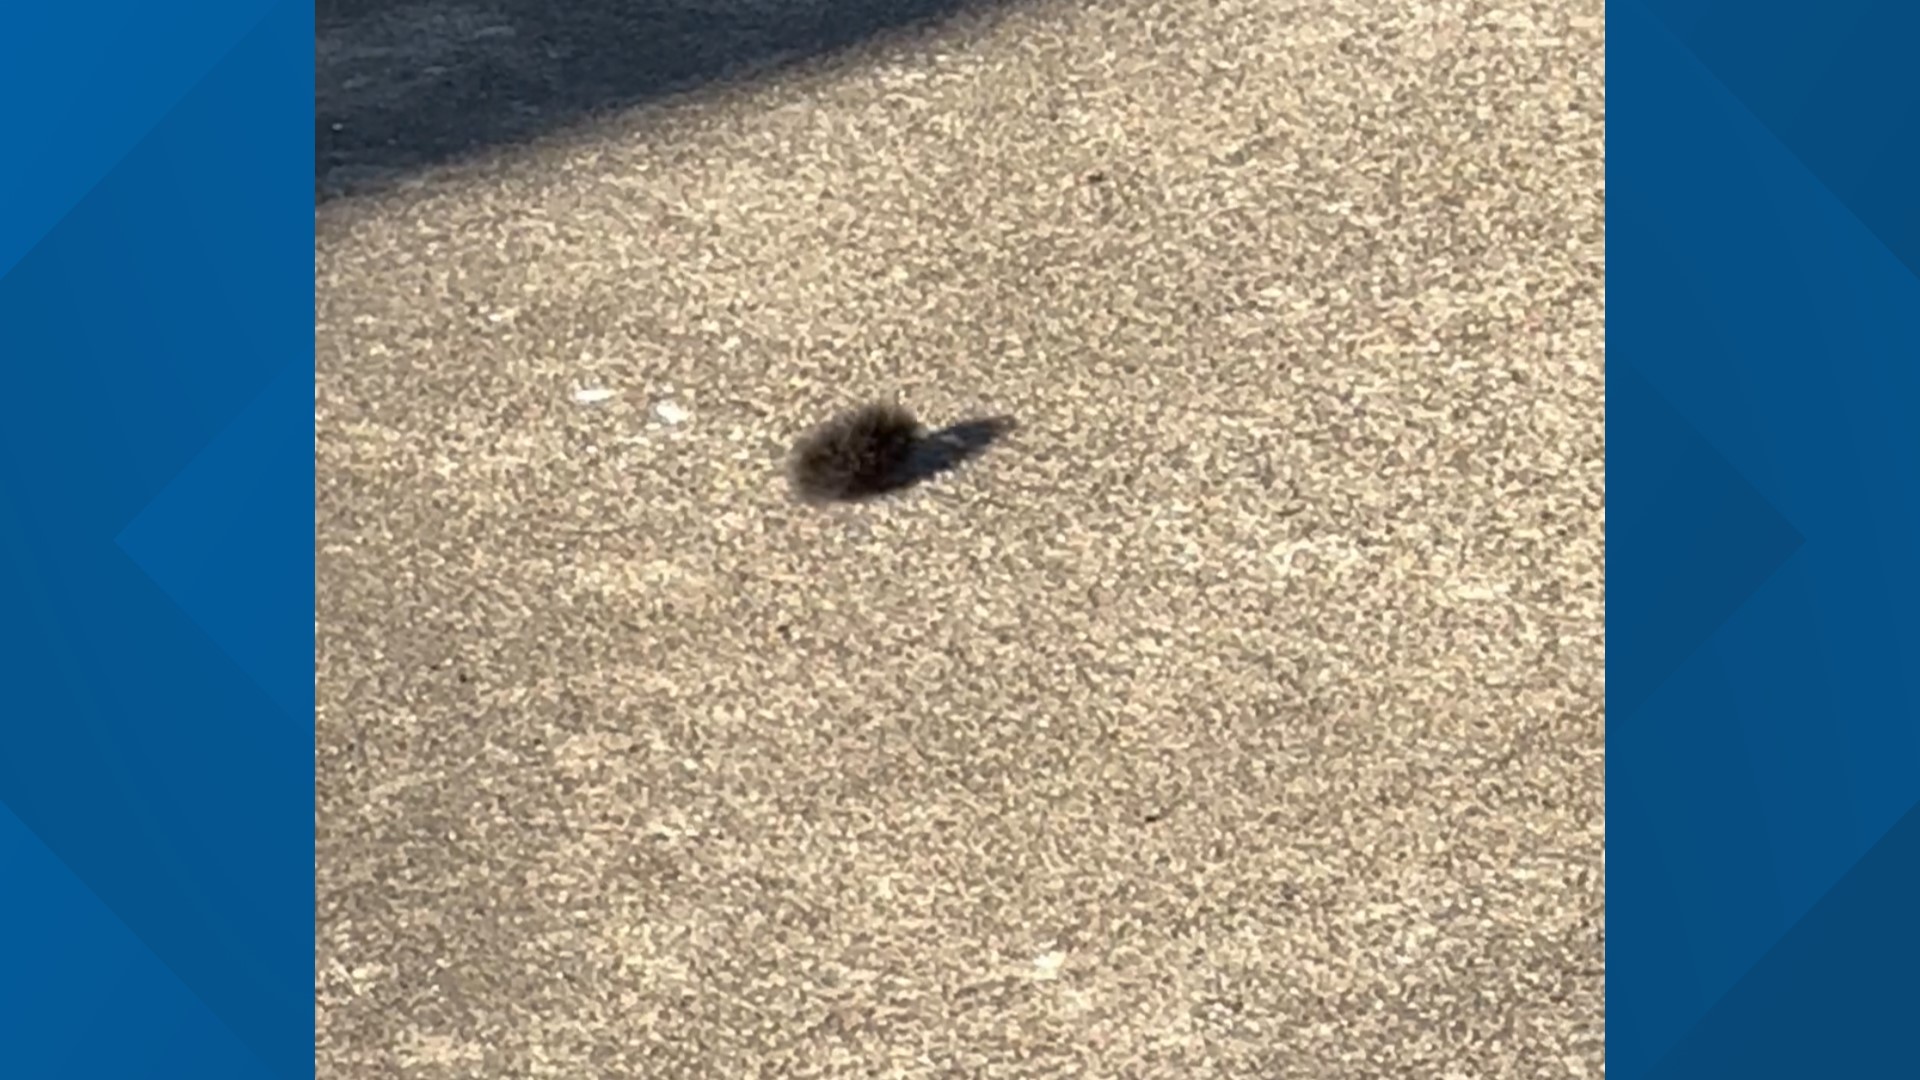 Sighting of a saltmarsh caterpillar during spring in Houston